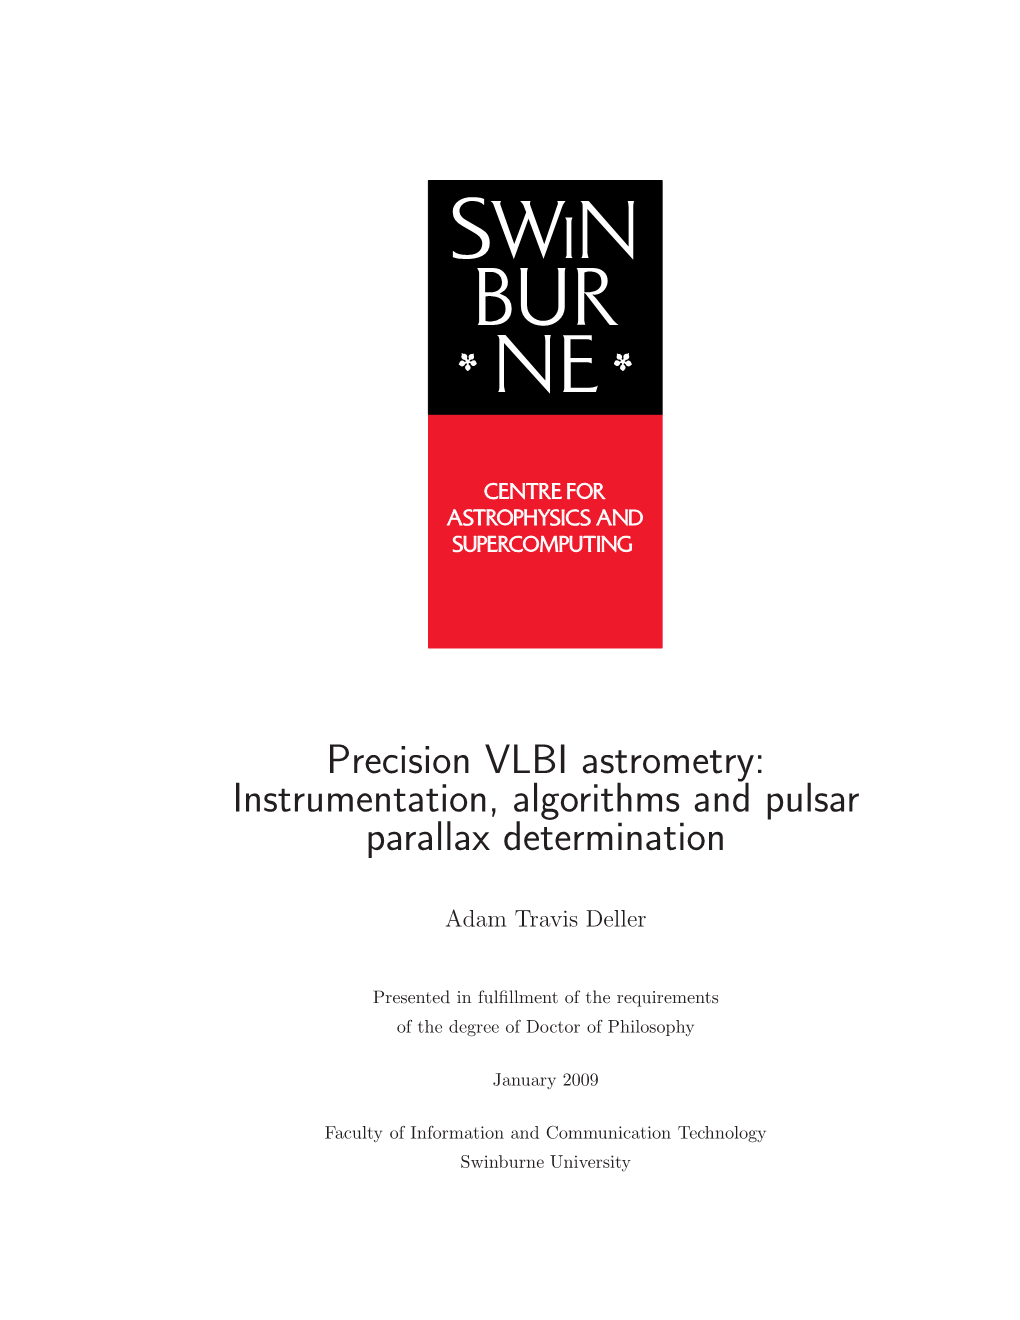 Precision VLBI Astrometry: Instrumentation, Algorithms and Pulsar Parallax Determination